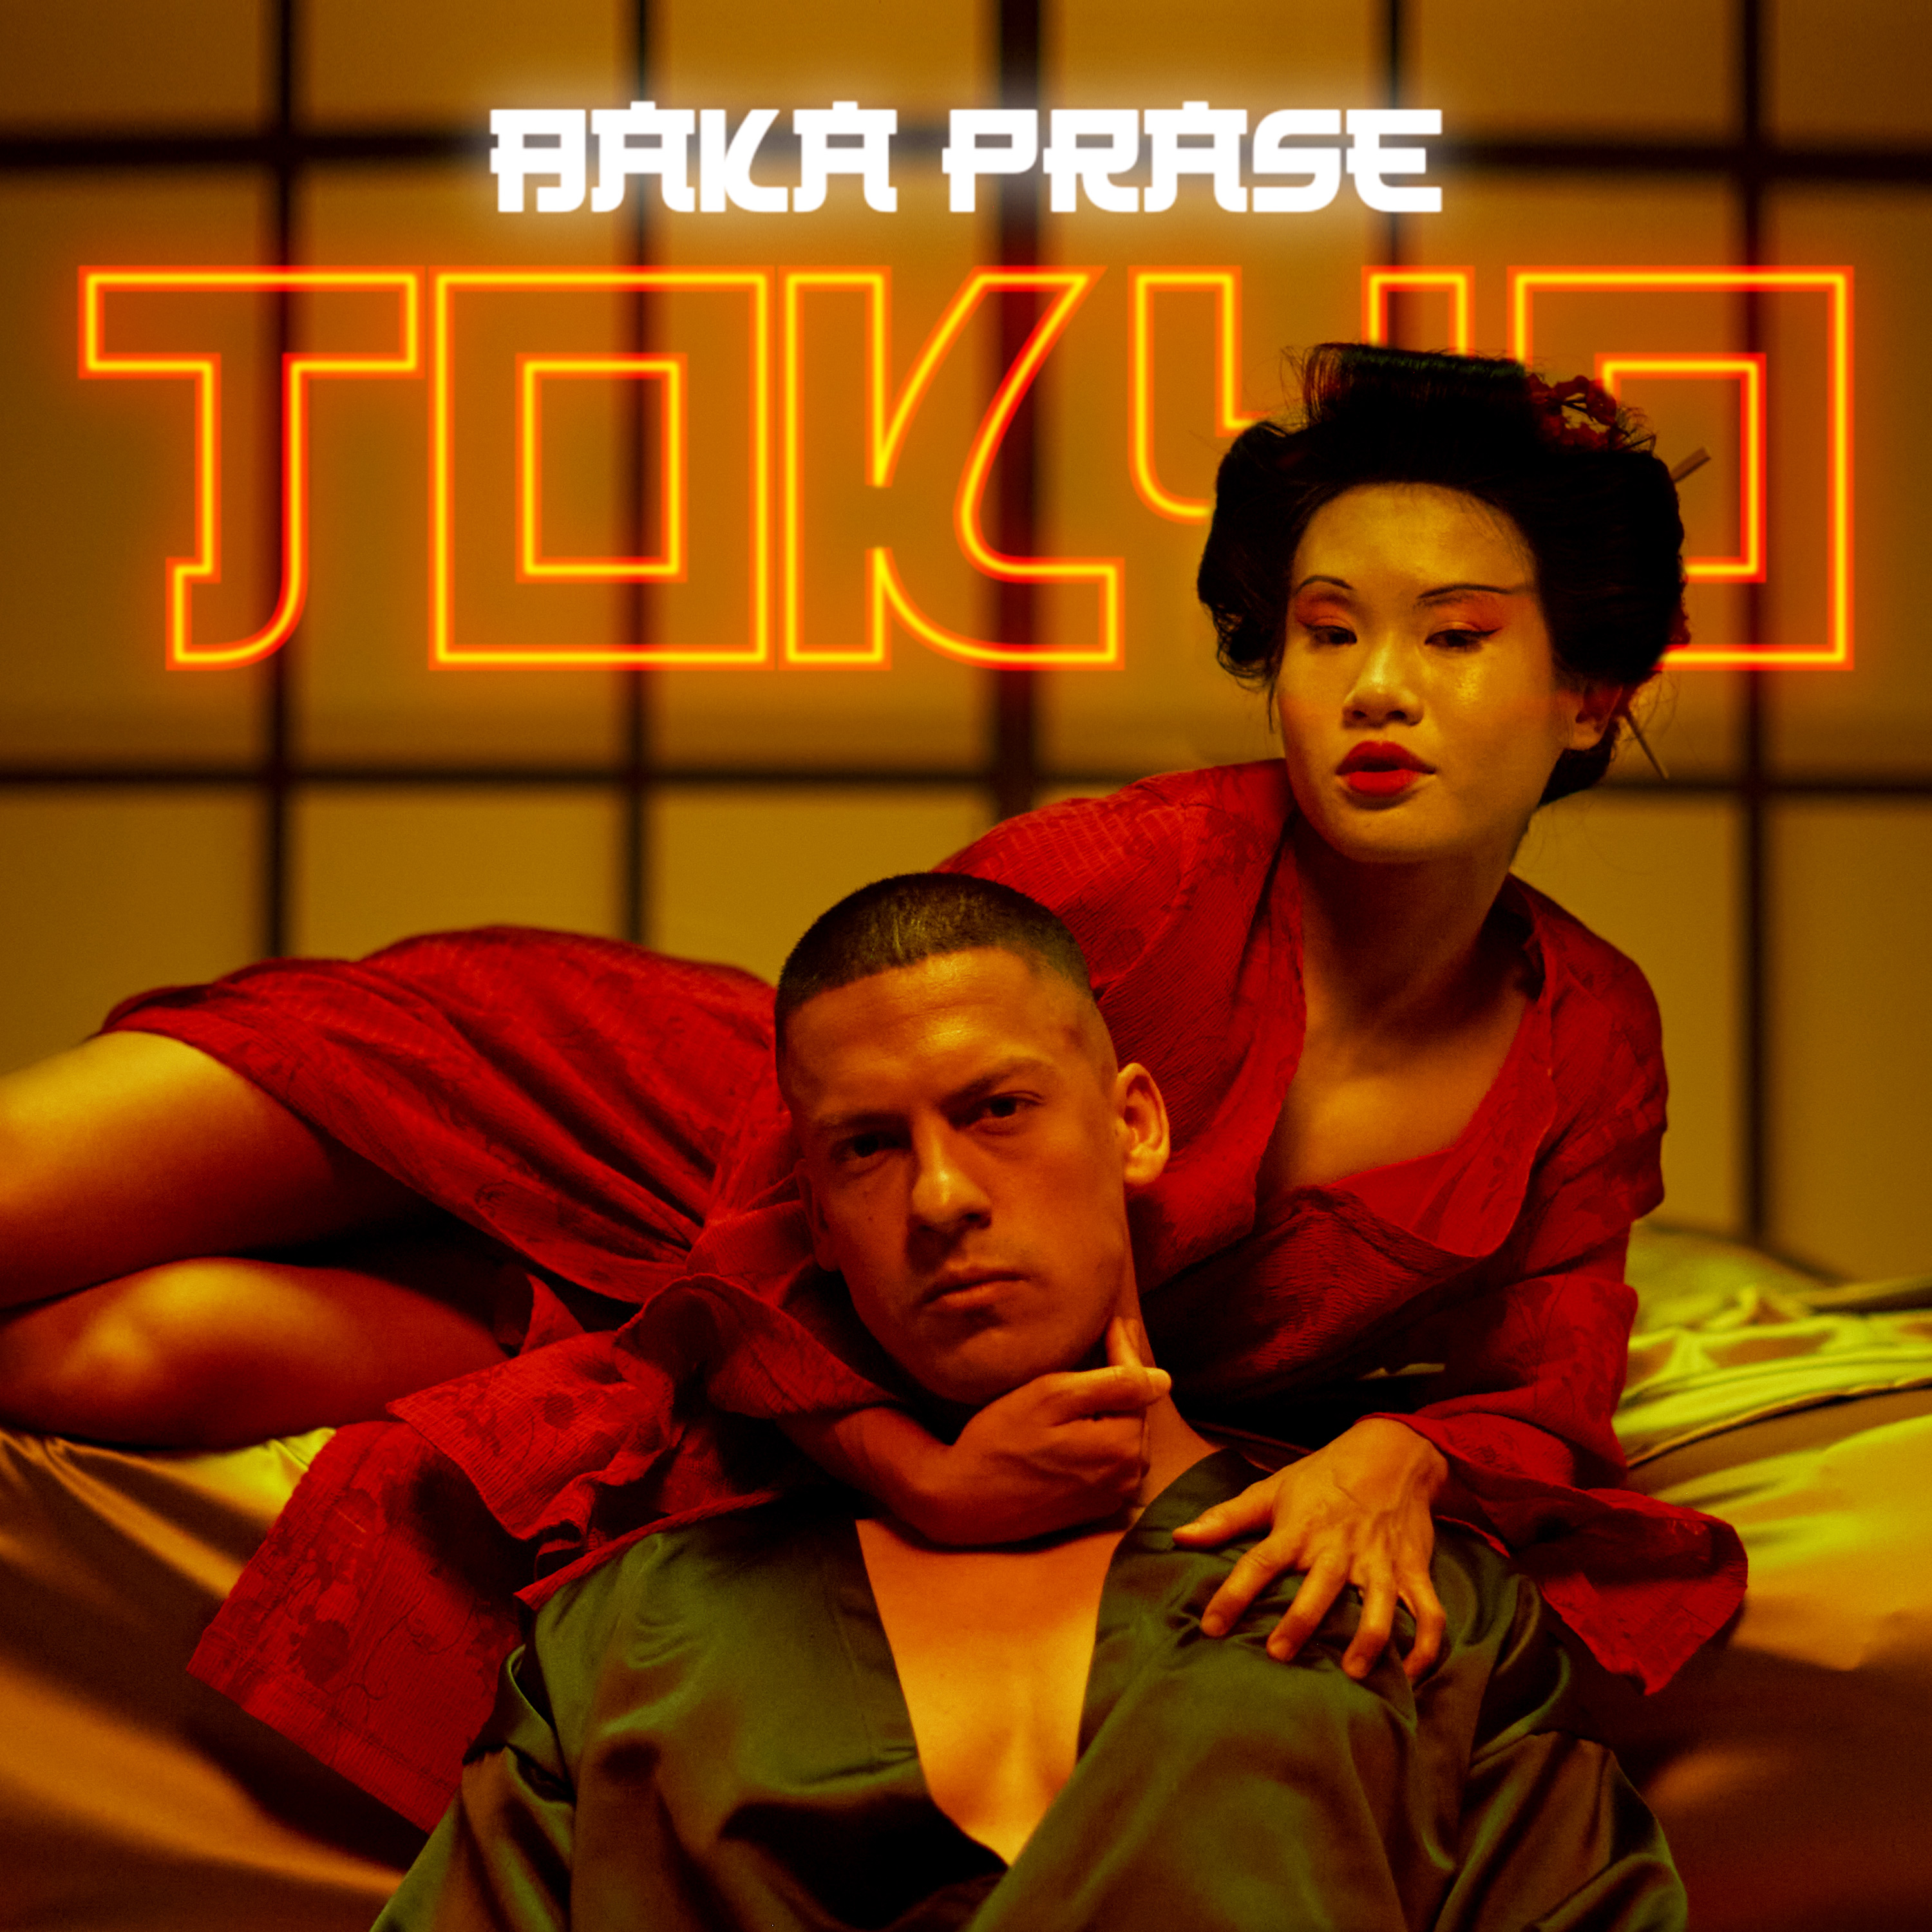 Baka Prase - Tokyo - Listen on Spotify, Deezer, YouTube, Google Play Music and Buy on Amazon, iTunes Google Play | EMDC Network